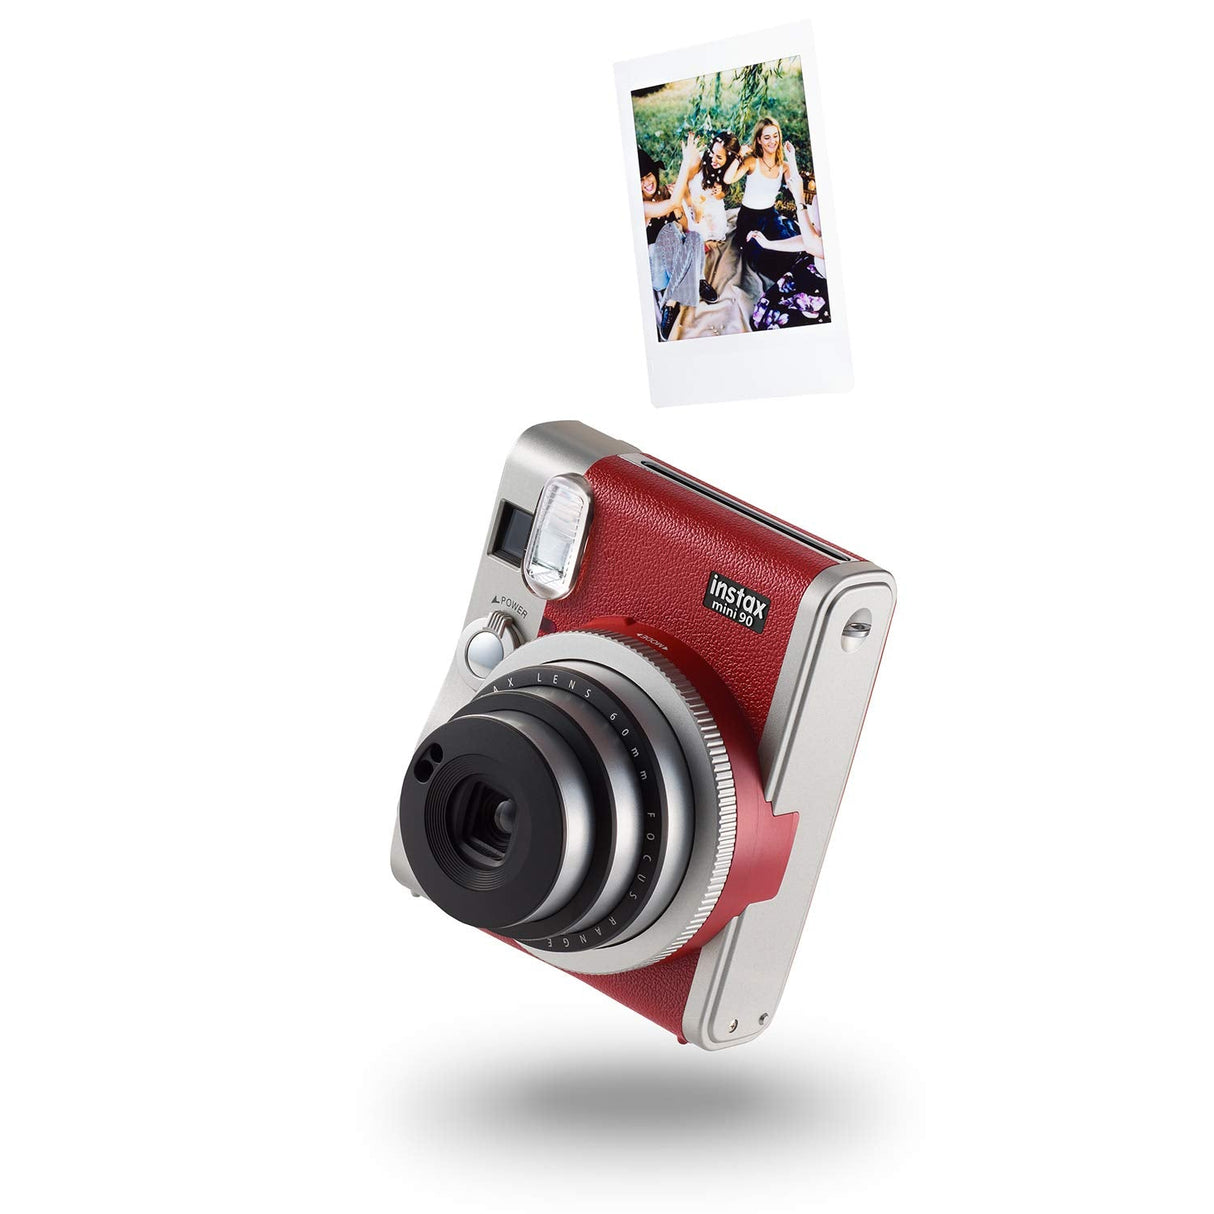  Fujifilm Instax Mini 90 Neo Classic Instant Film Camera Brown  with 20 Instant Film Accessory Bundle : Electronics